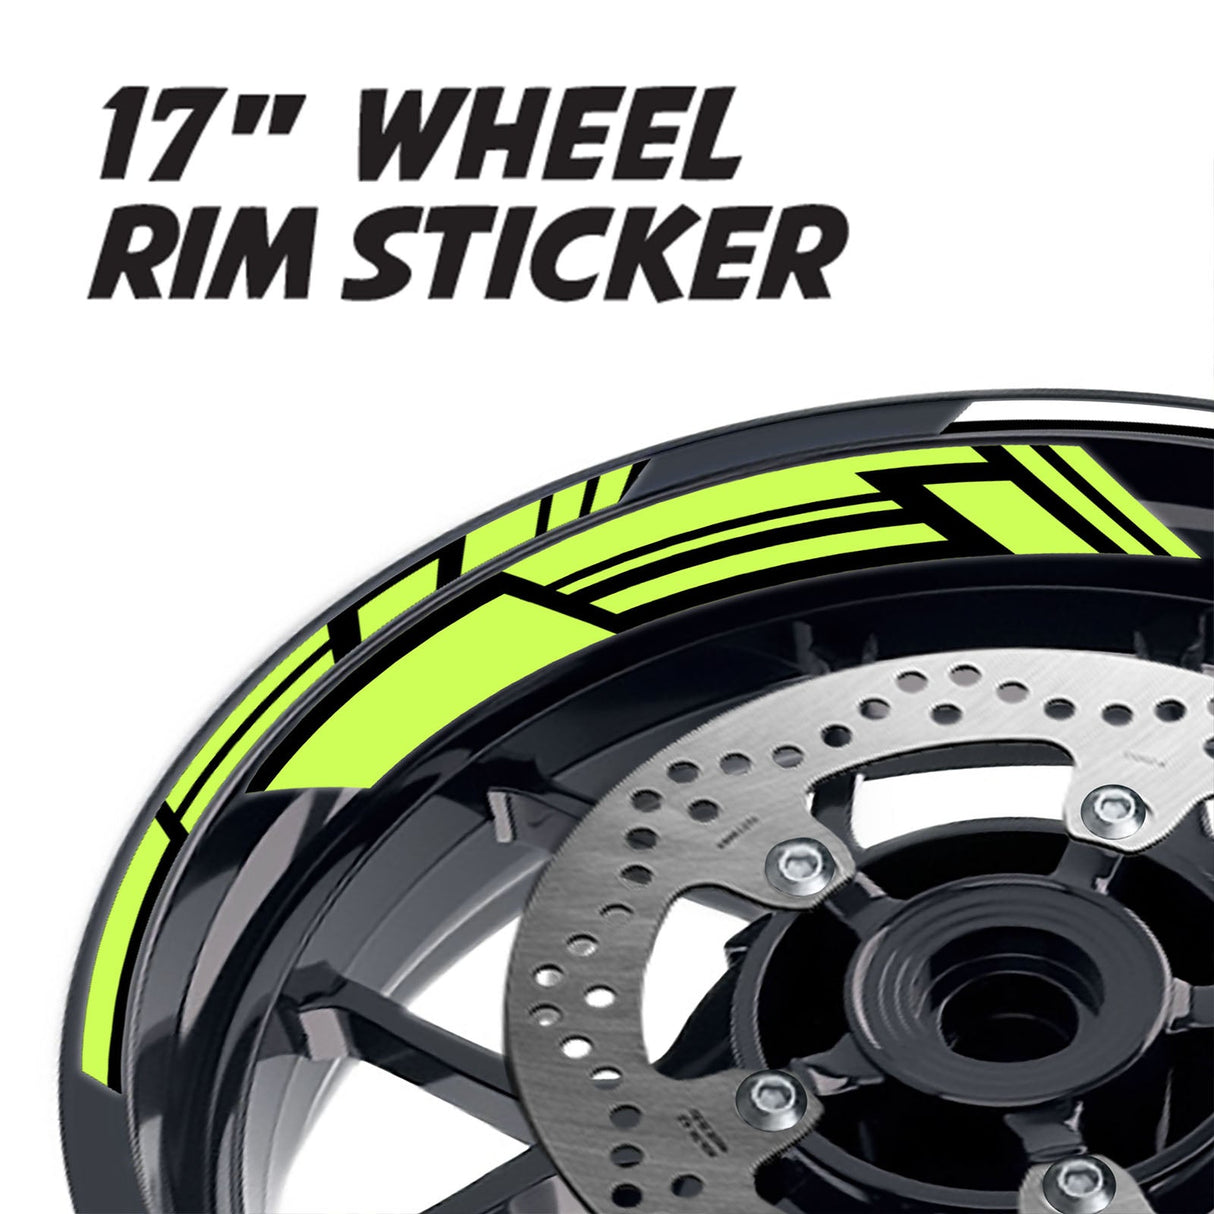 StickerBao Light Green 17 inch GP19 Platinum Inner Edge Rim Sticker Universal Motorcycle Rim Wheel Decal Racing For Honda